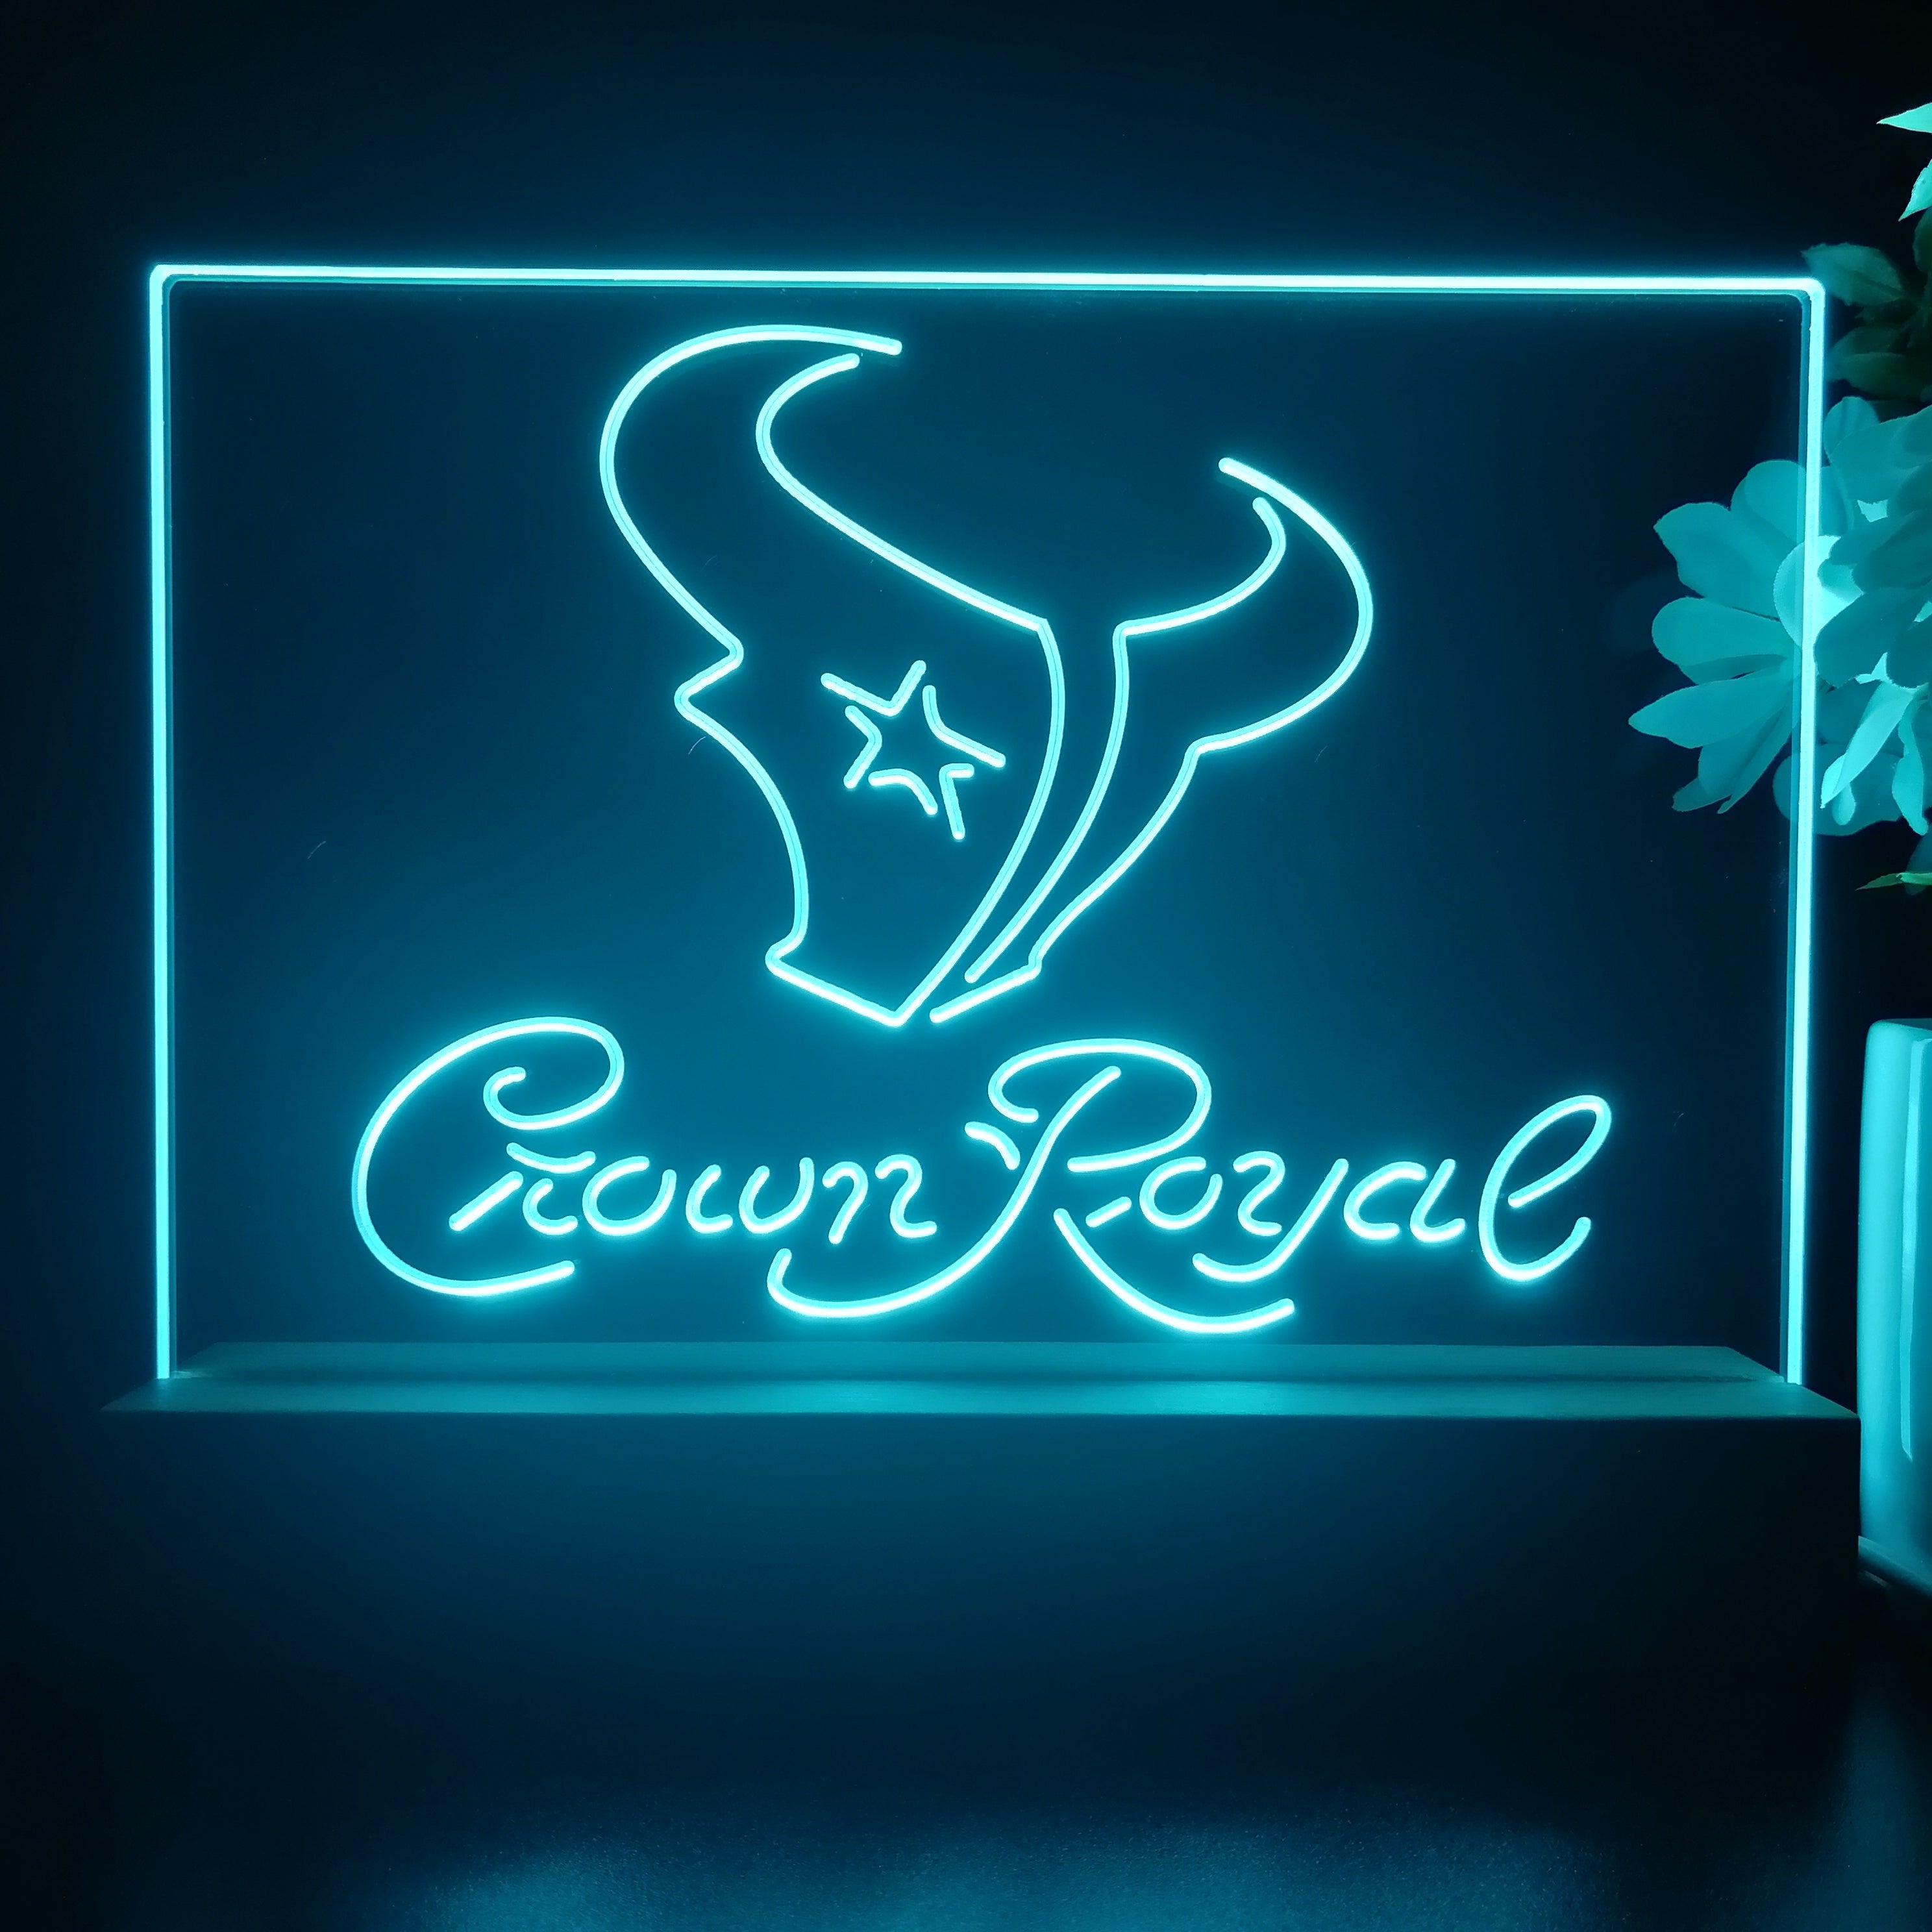 Crown Royal Bar Houston Texans Est. 2002 Night Light Pub Bar Lamp